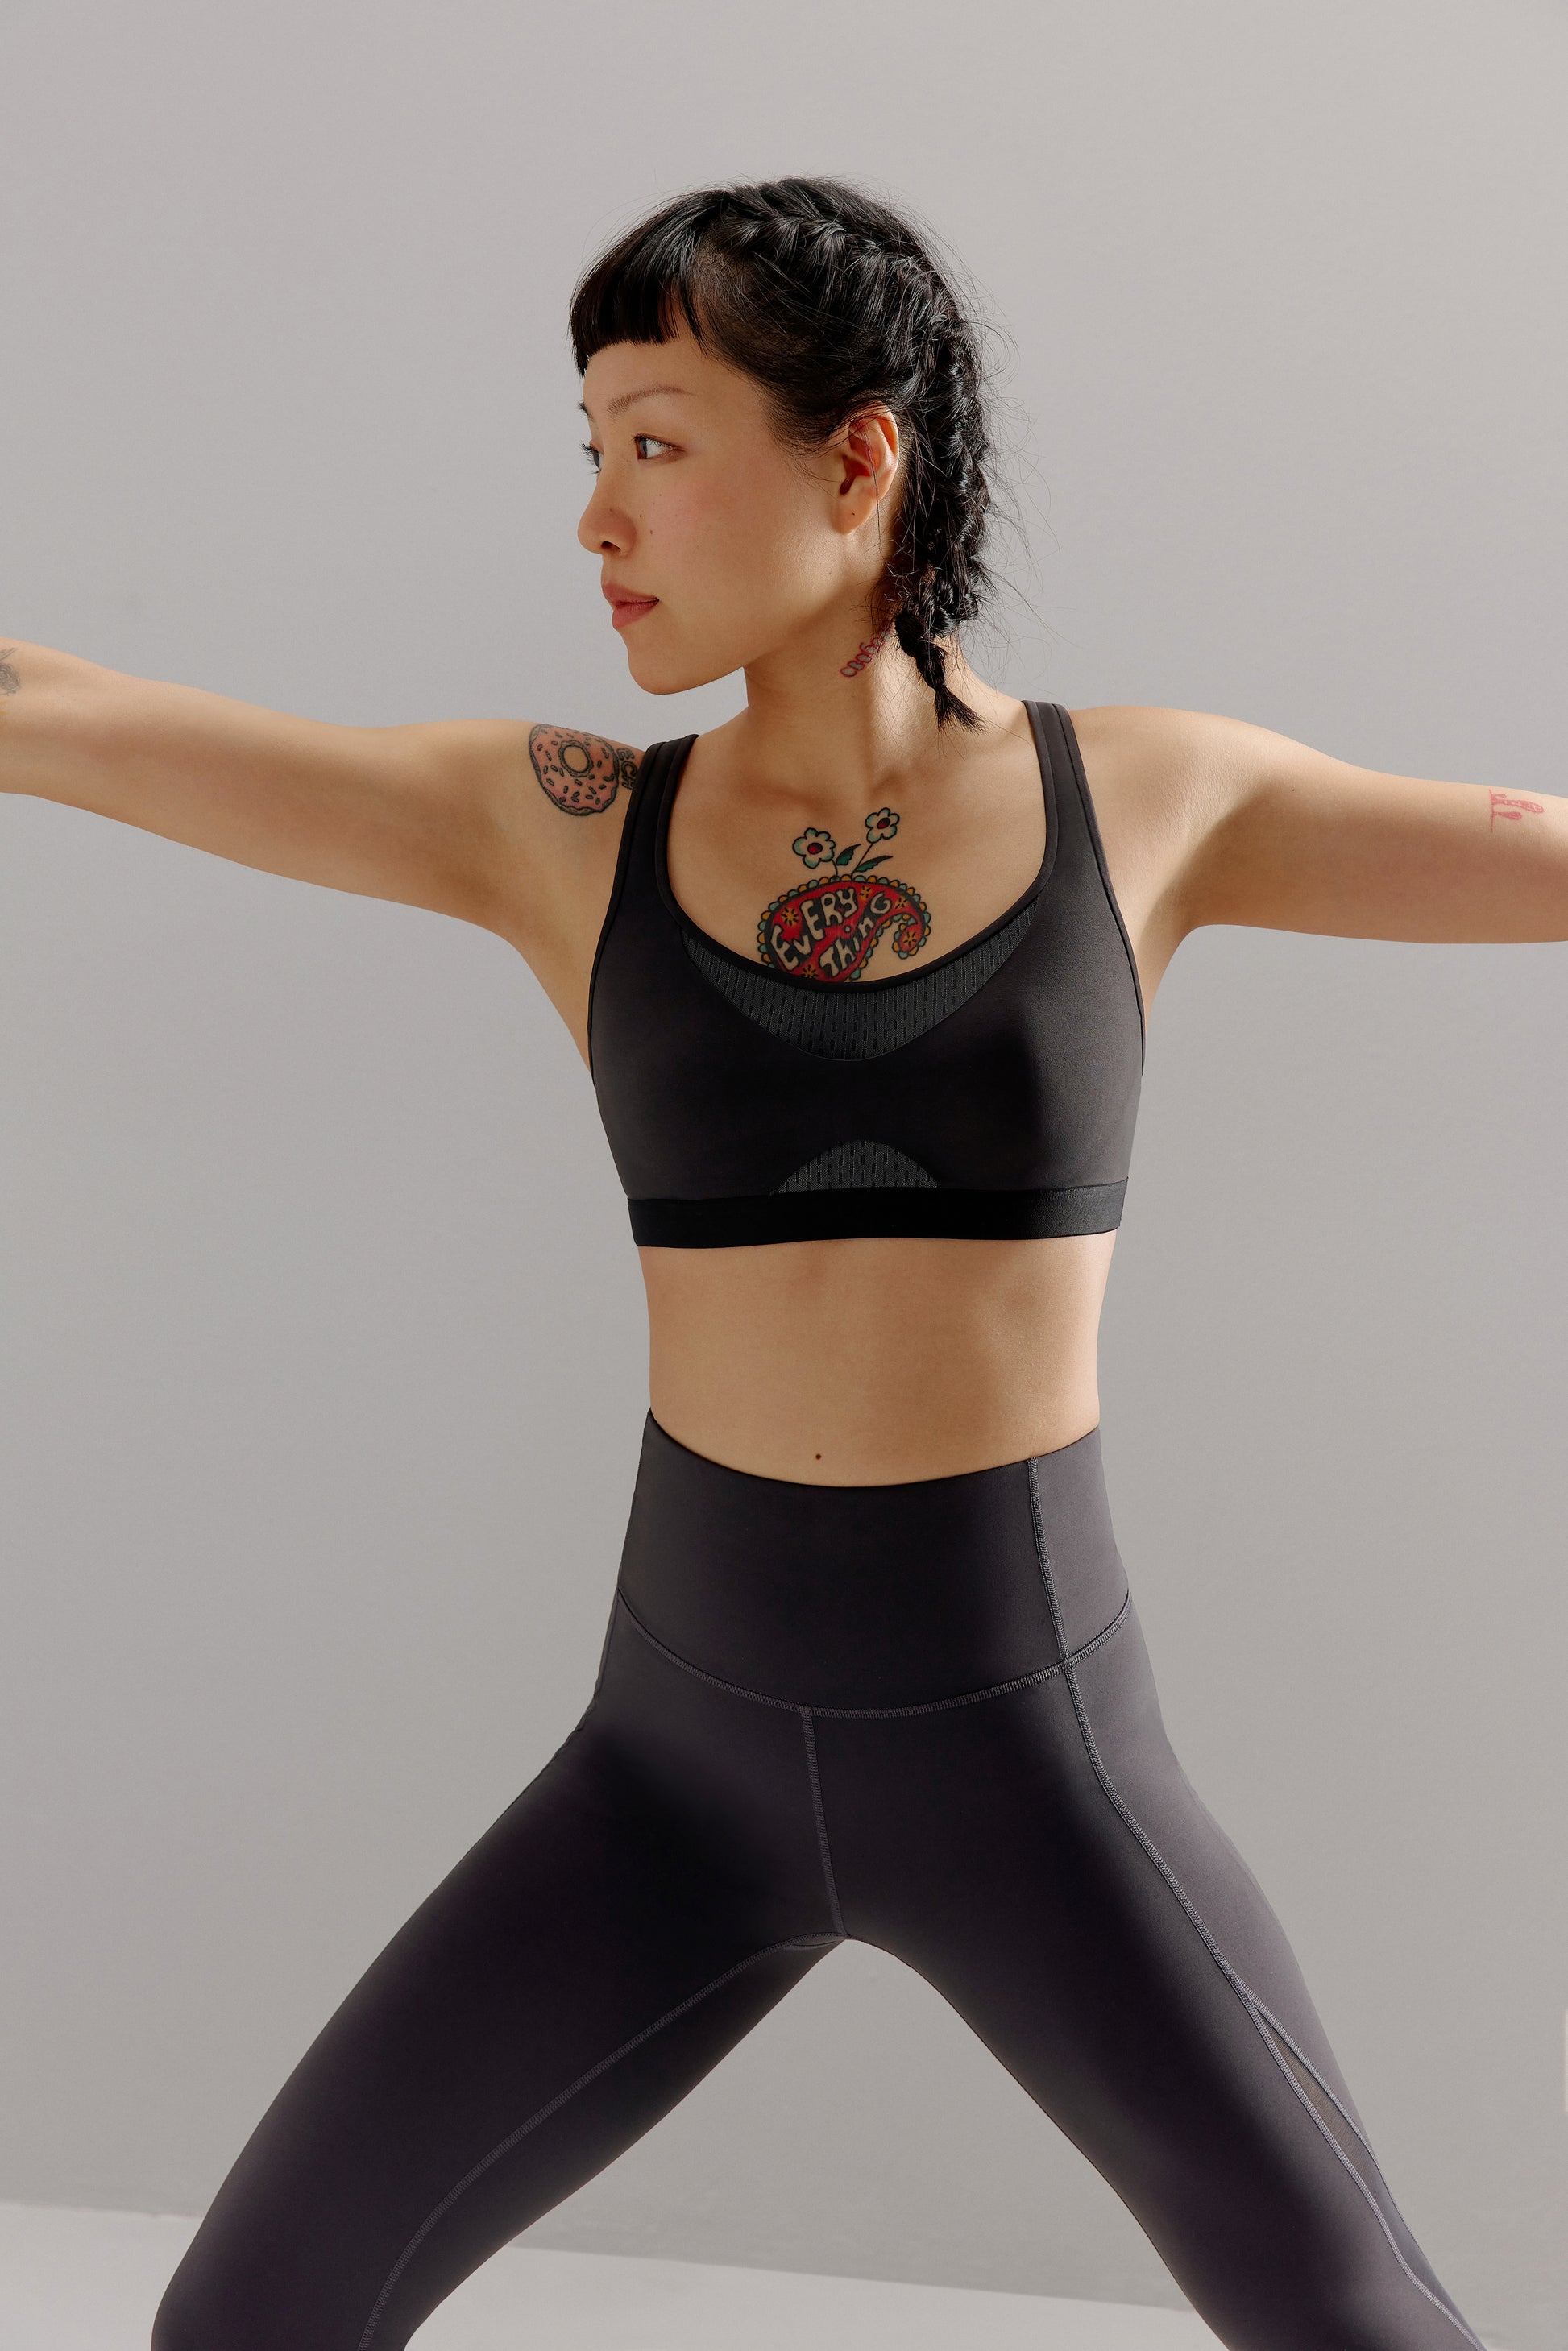 Nike Womens Dri-FIT Mesh Twist-Racerback Yoga Training Tank Top Black Size  M $35